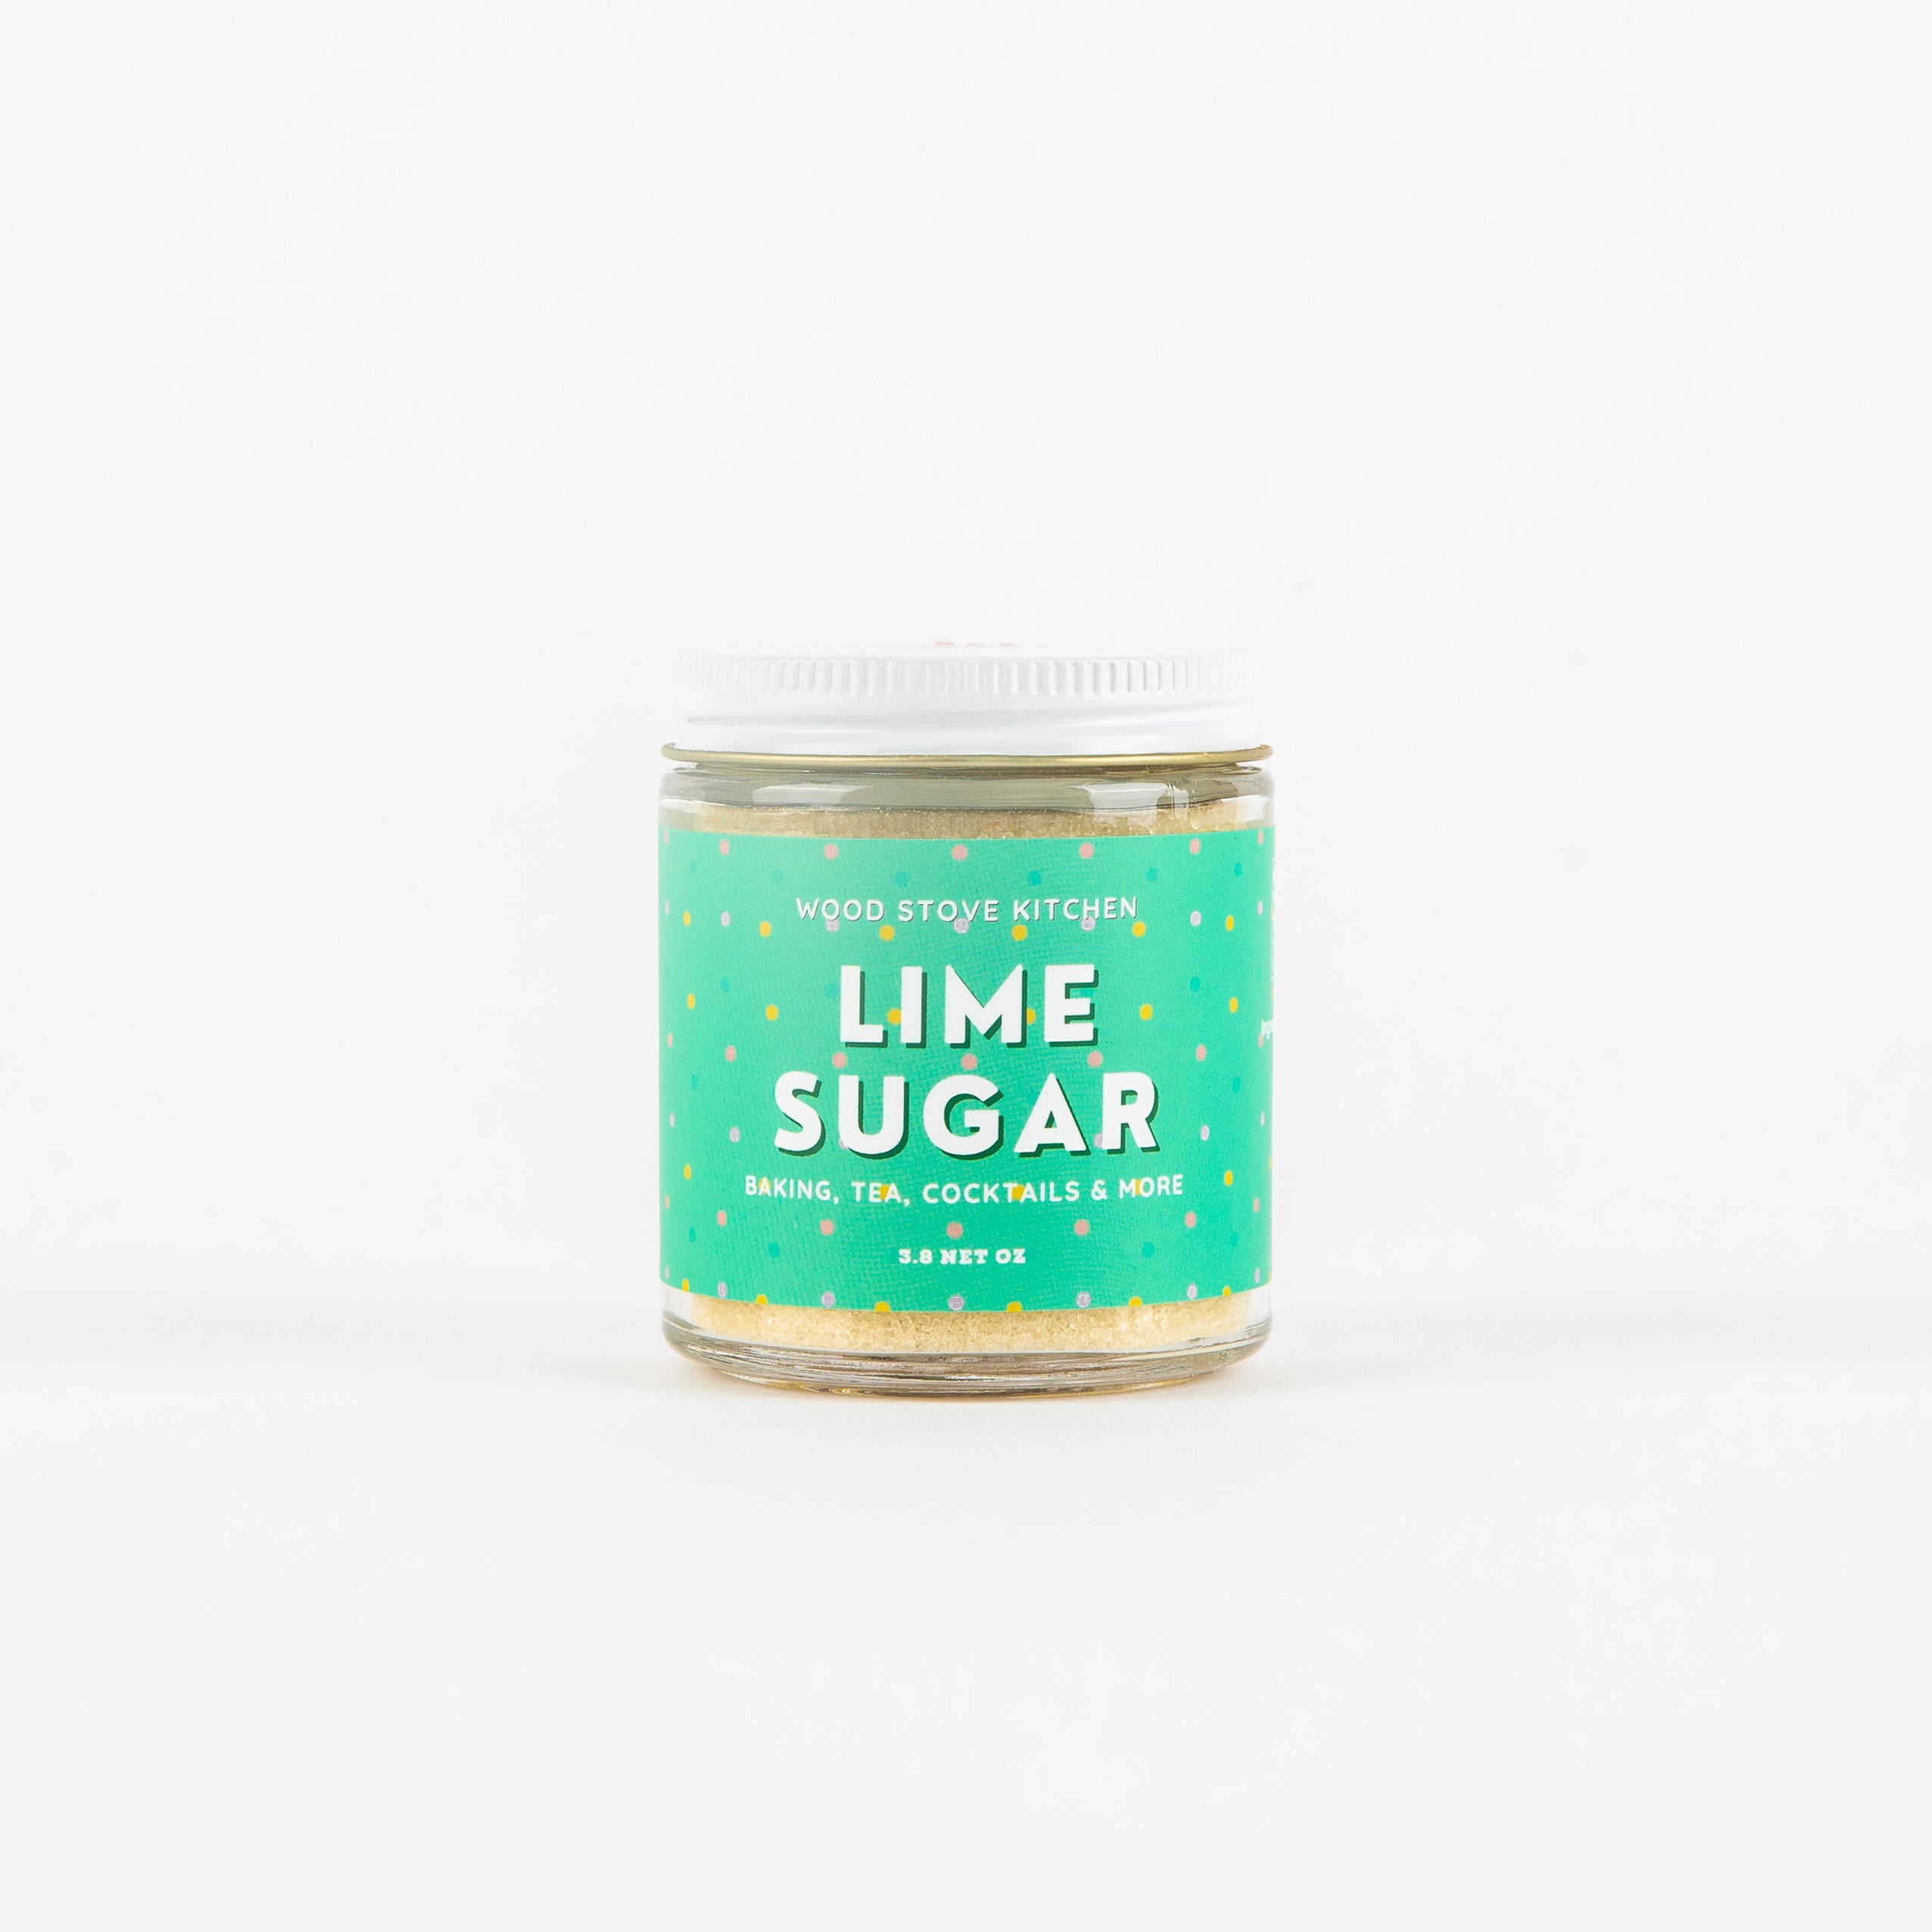 Lime Sugar for Baking, Tea, Cocktails & More